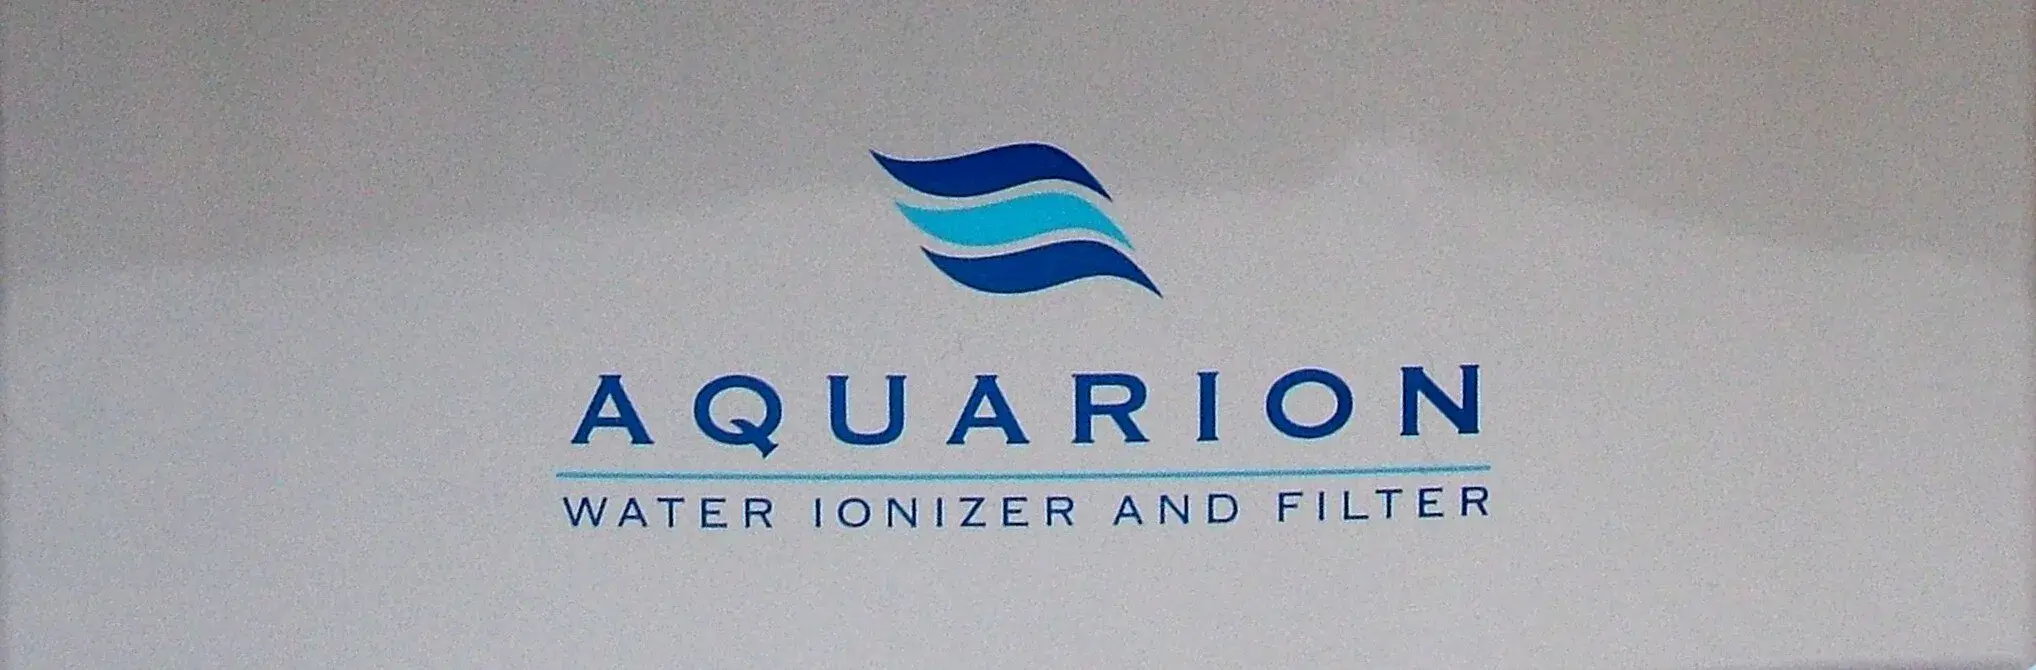 Aquarion - jonizator wody z filtrem